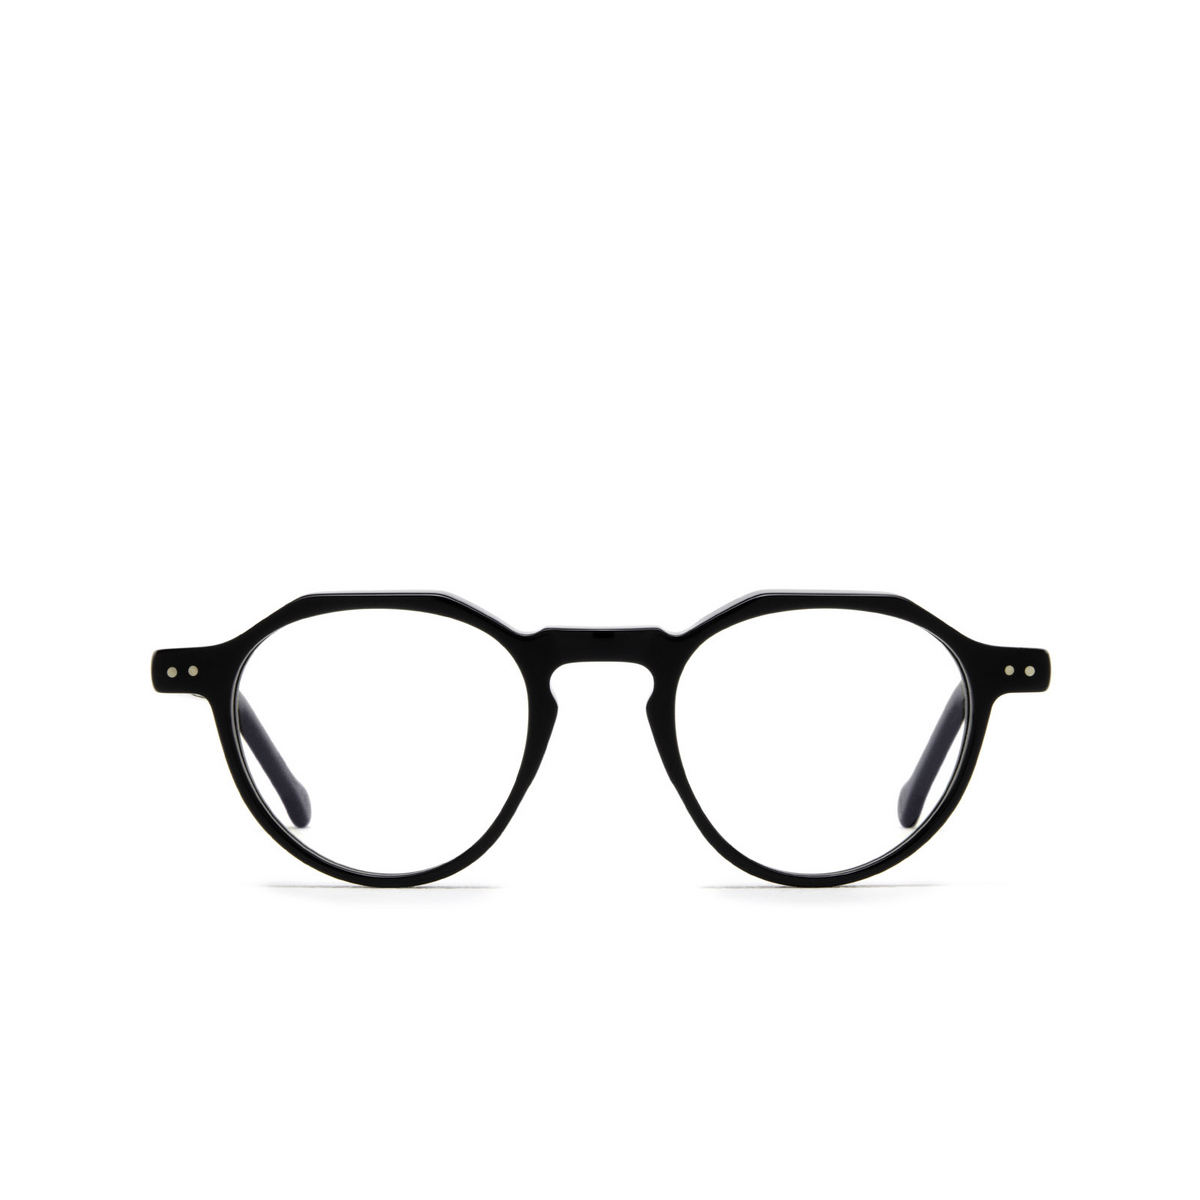 Lesca ICON Eyeglasses 5 Black - front view